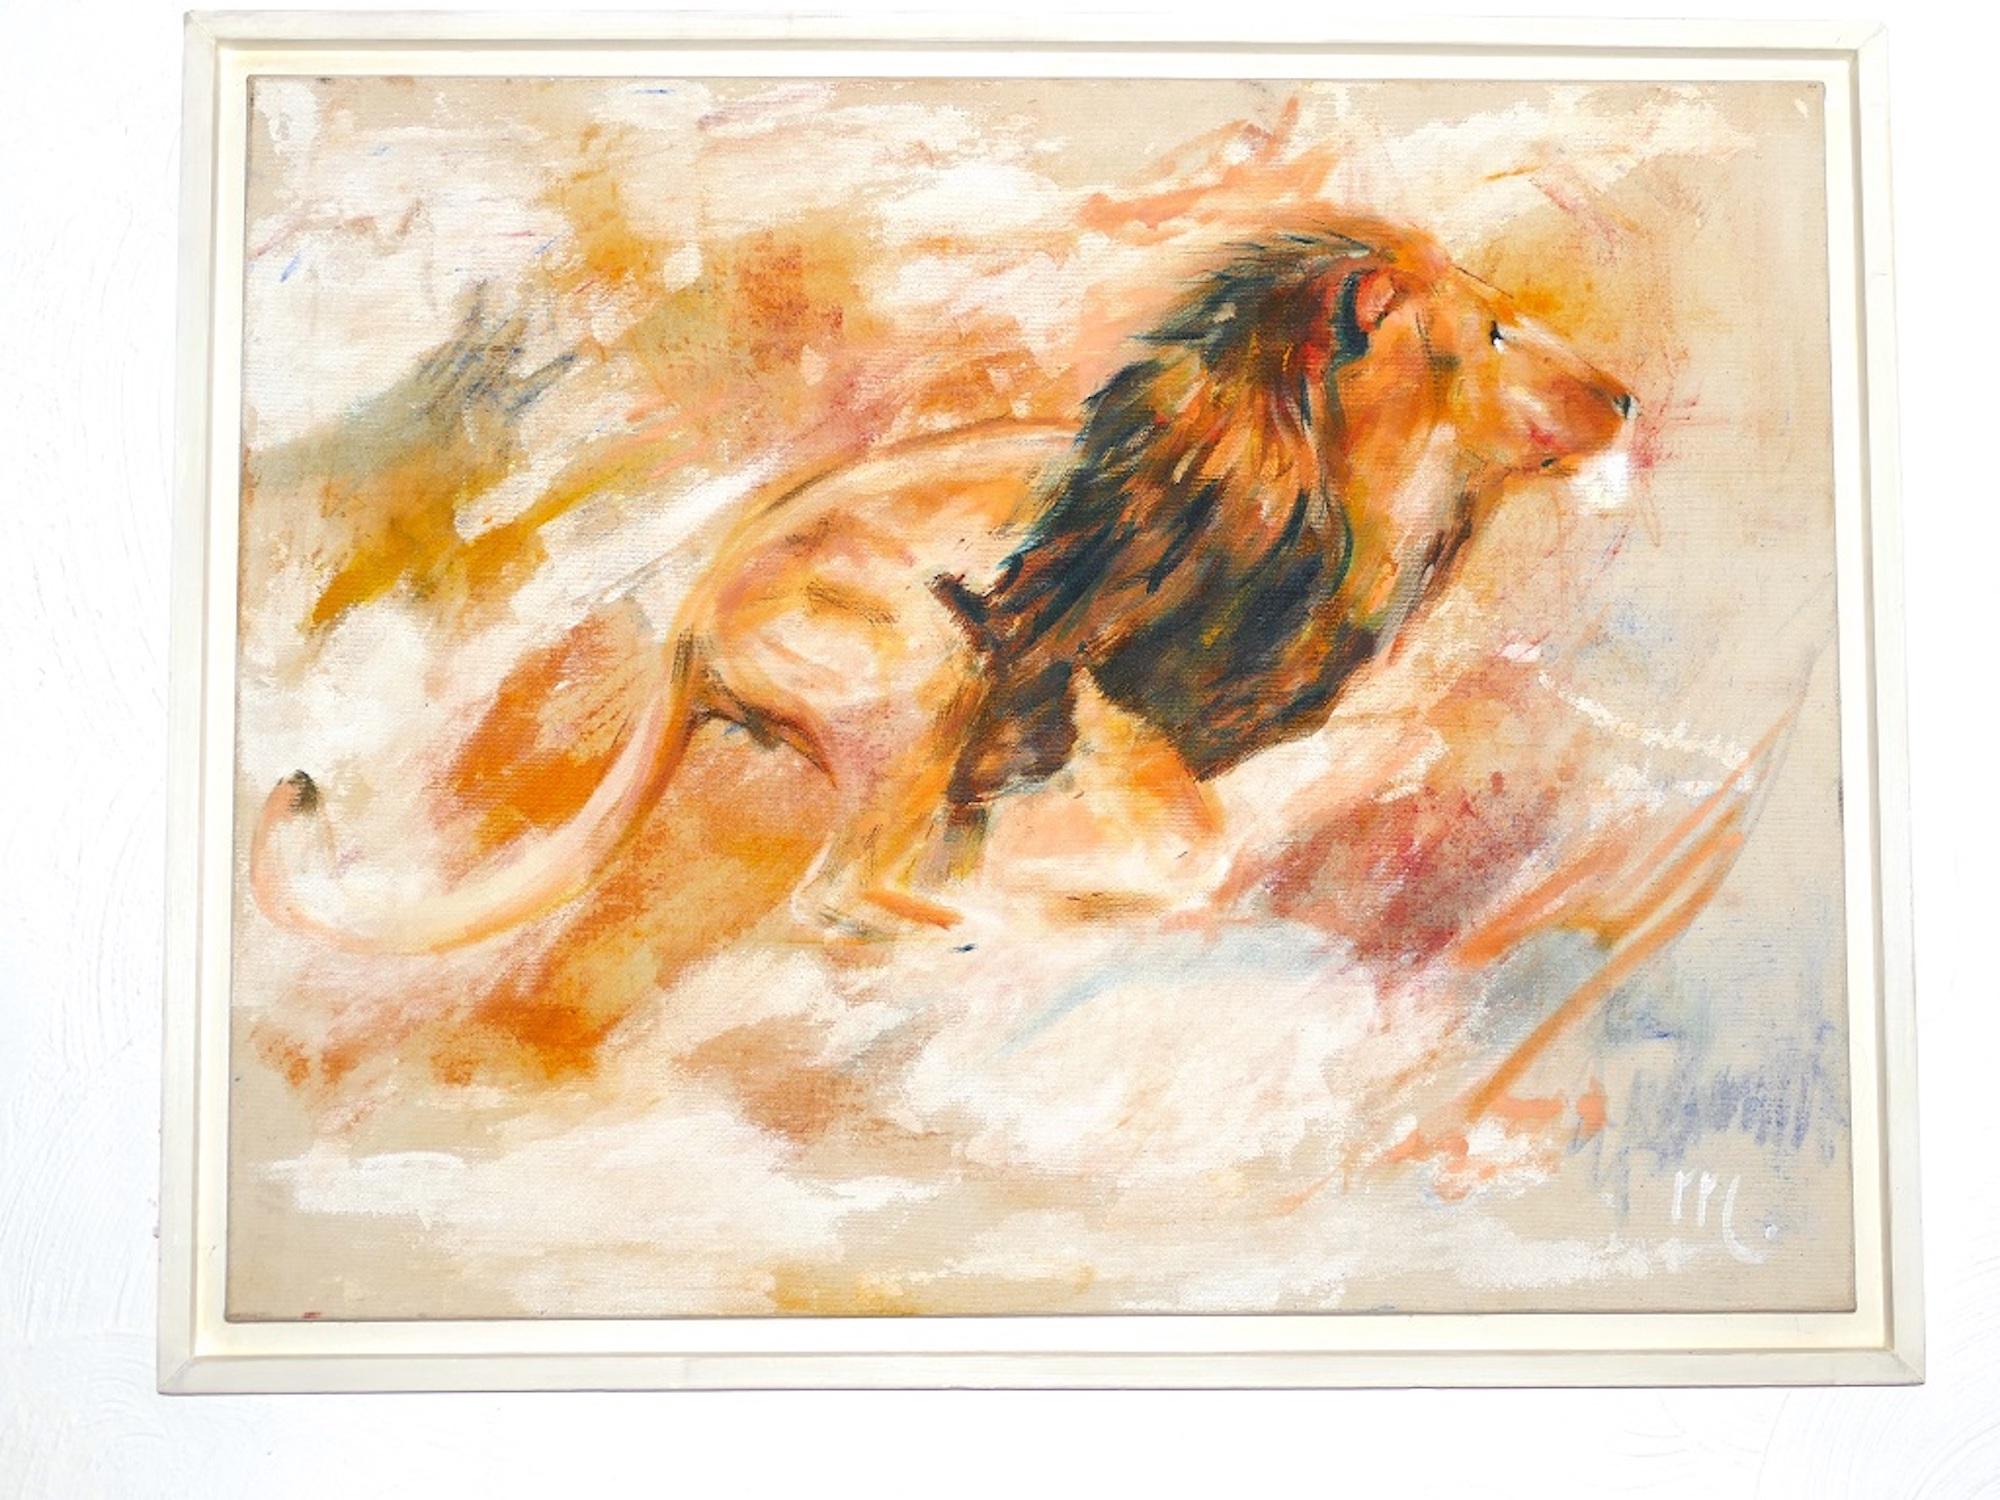 Lion - Original Oil on Canvas by Marij Hendrickx - Early 2000s 1